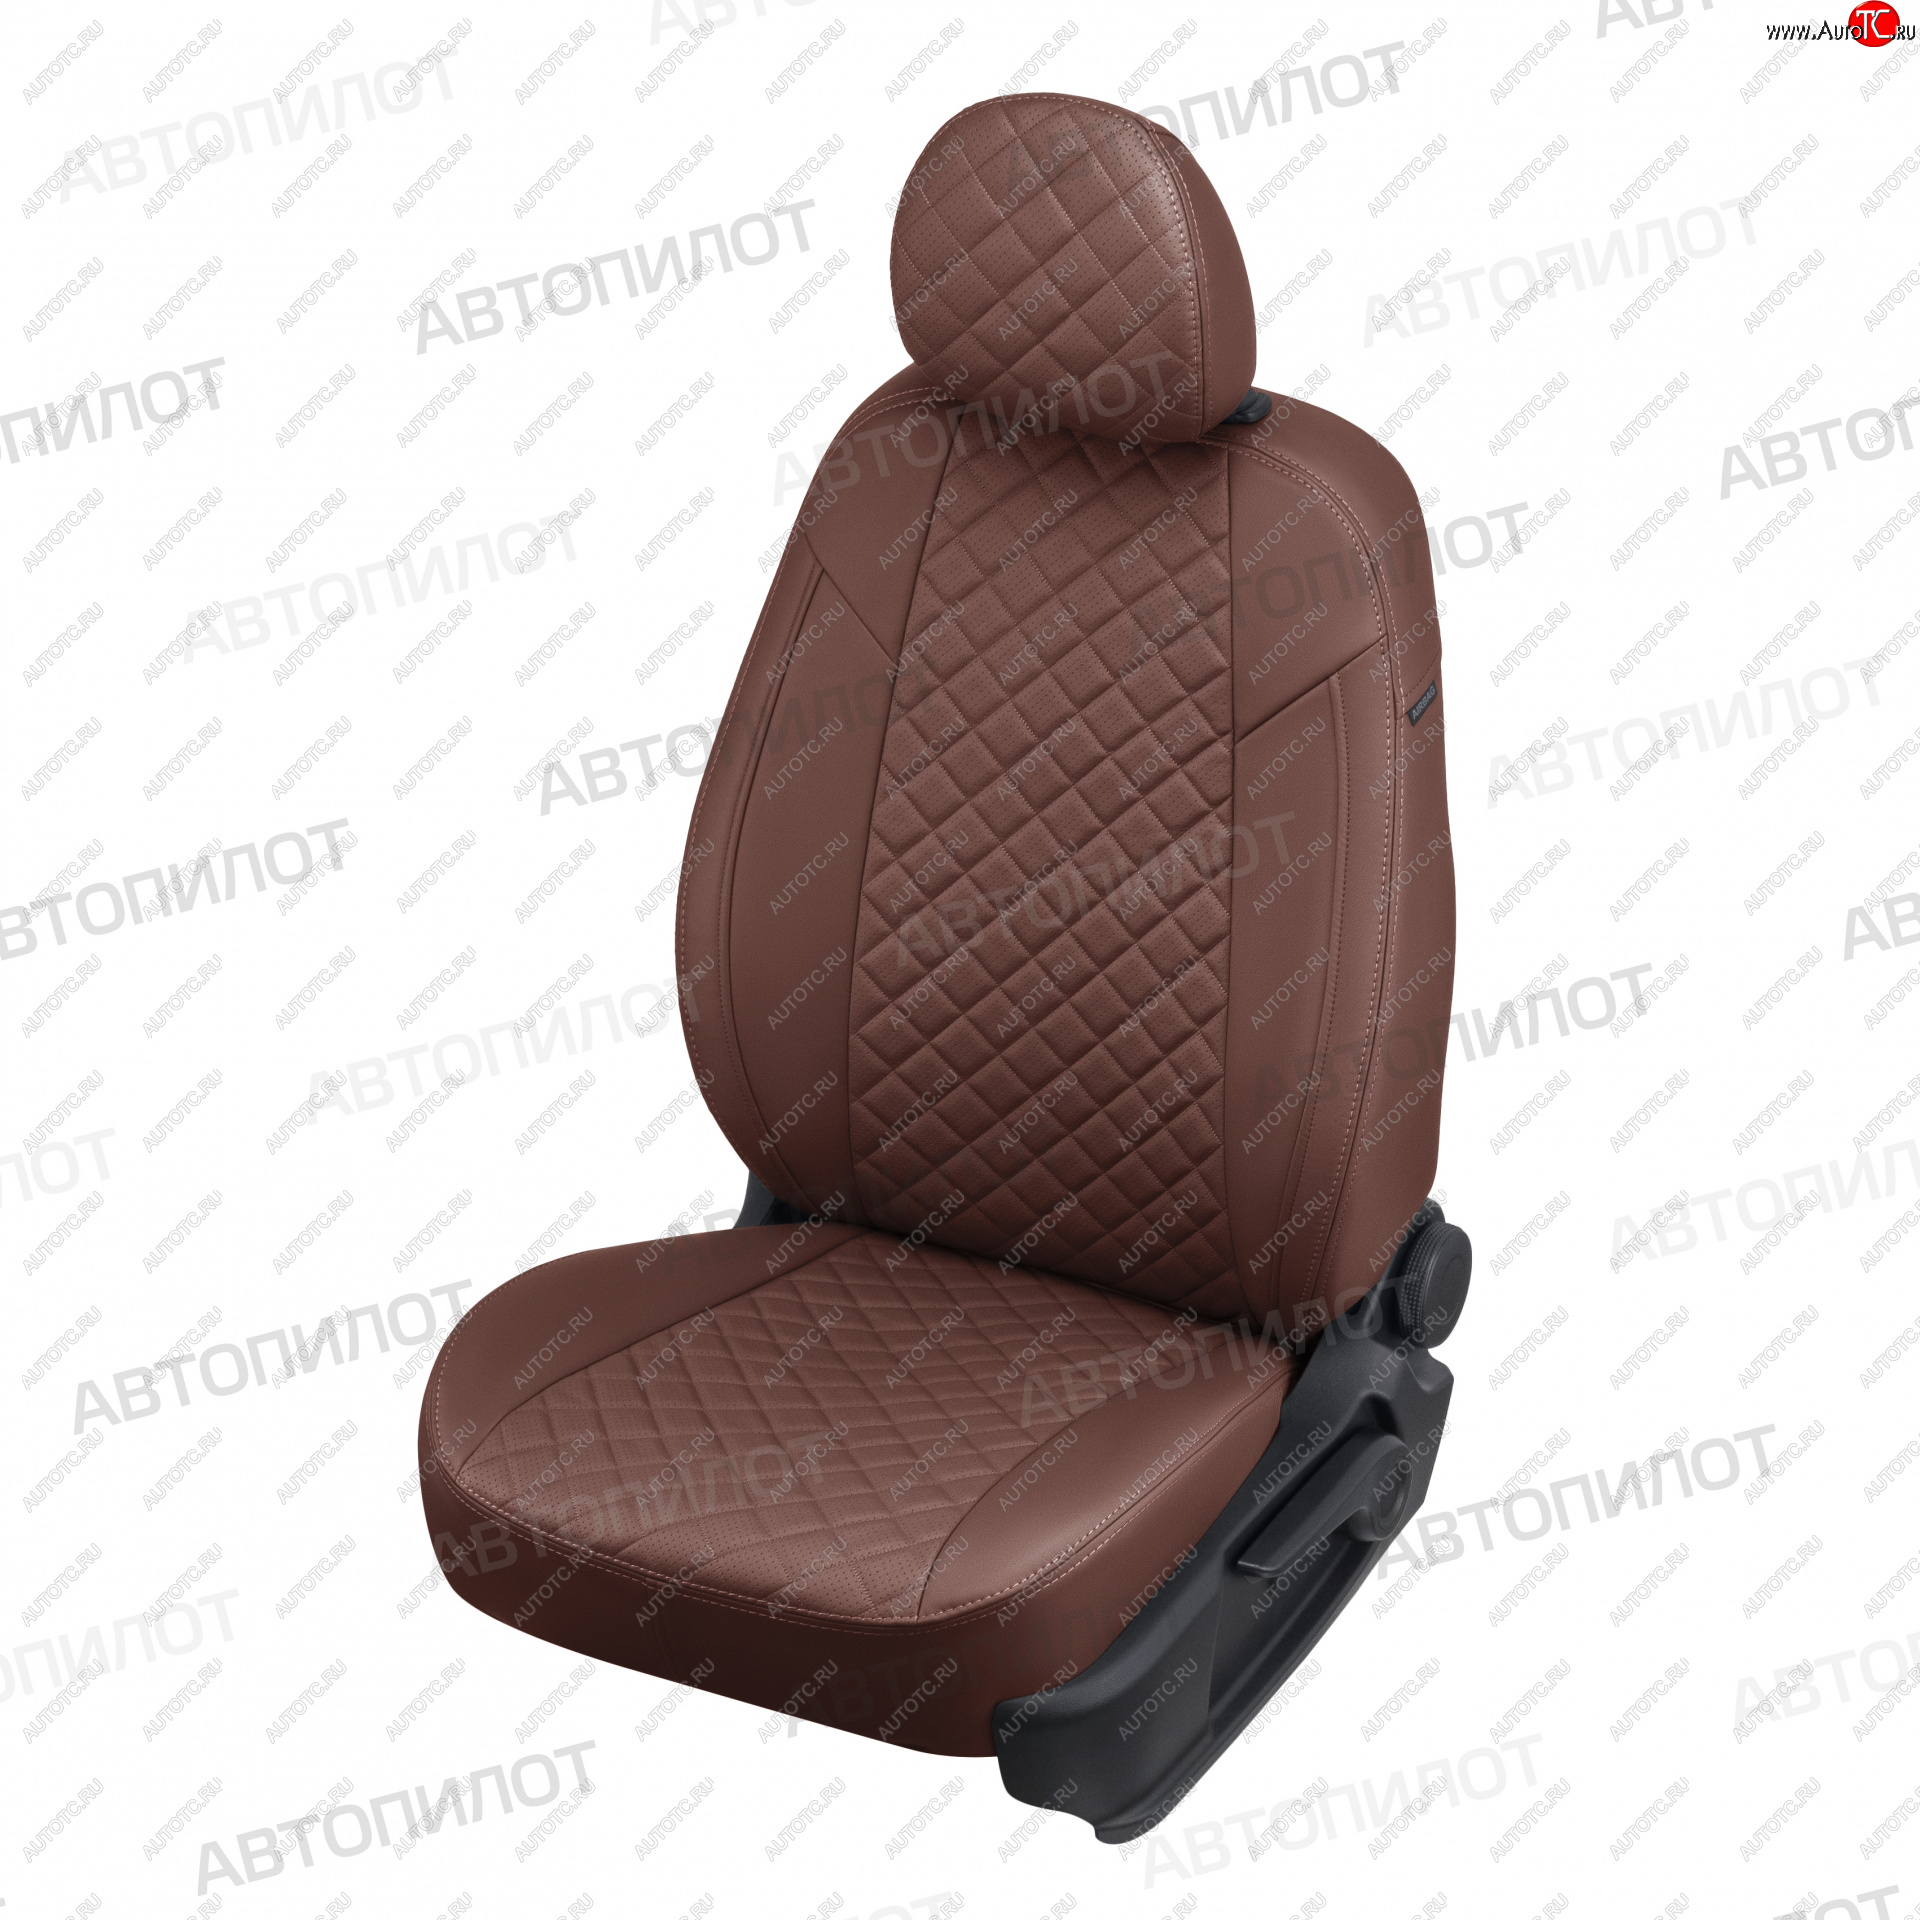 13 999 р. Чехлы сидений (экокожа) Автопилот Ромб  KIA Cerato Koup  1 TD (2008-2013) (темно-коричневый)